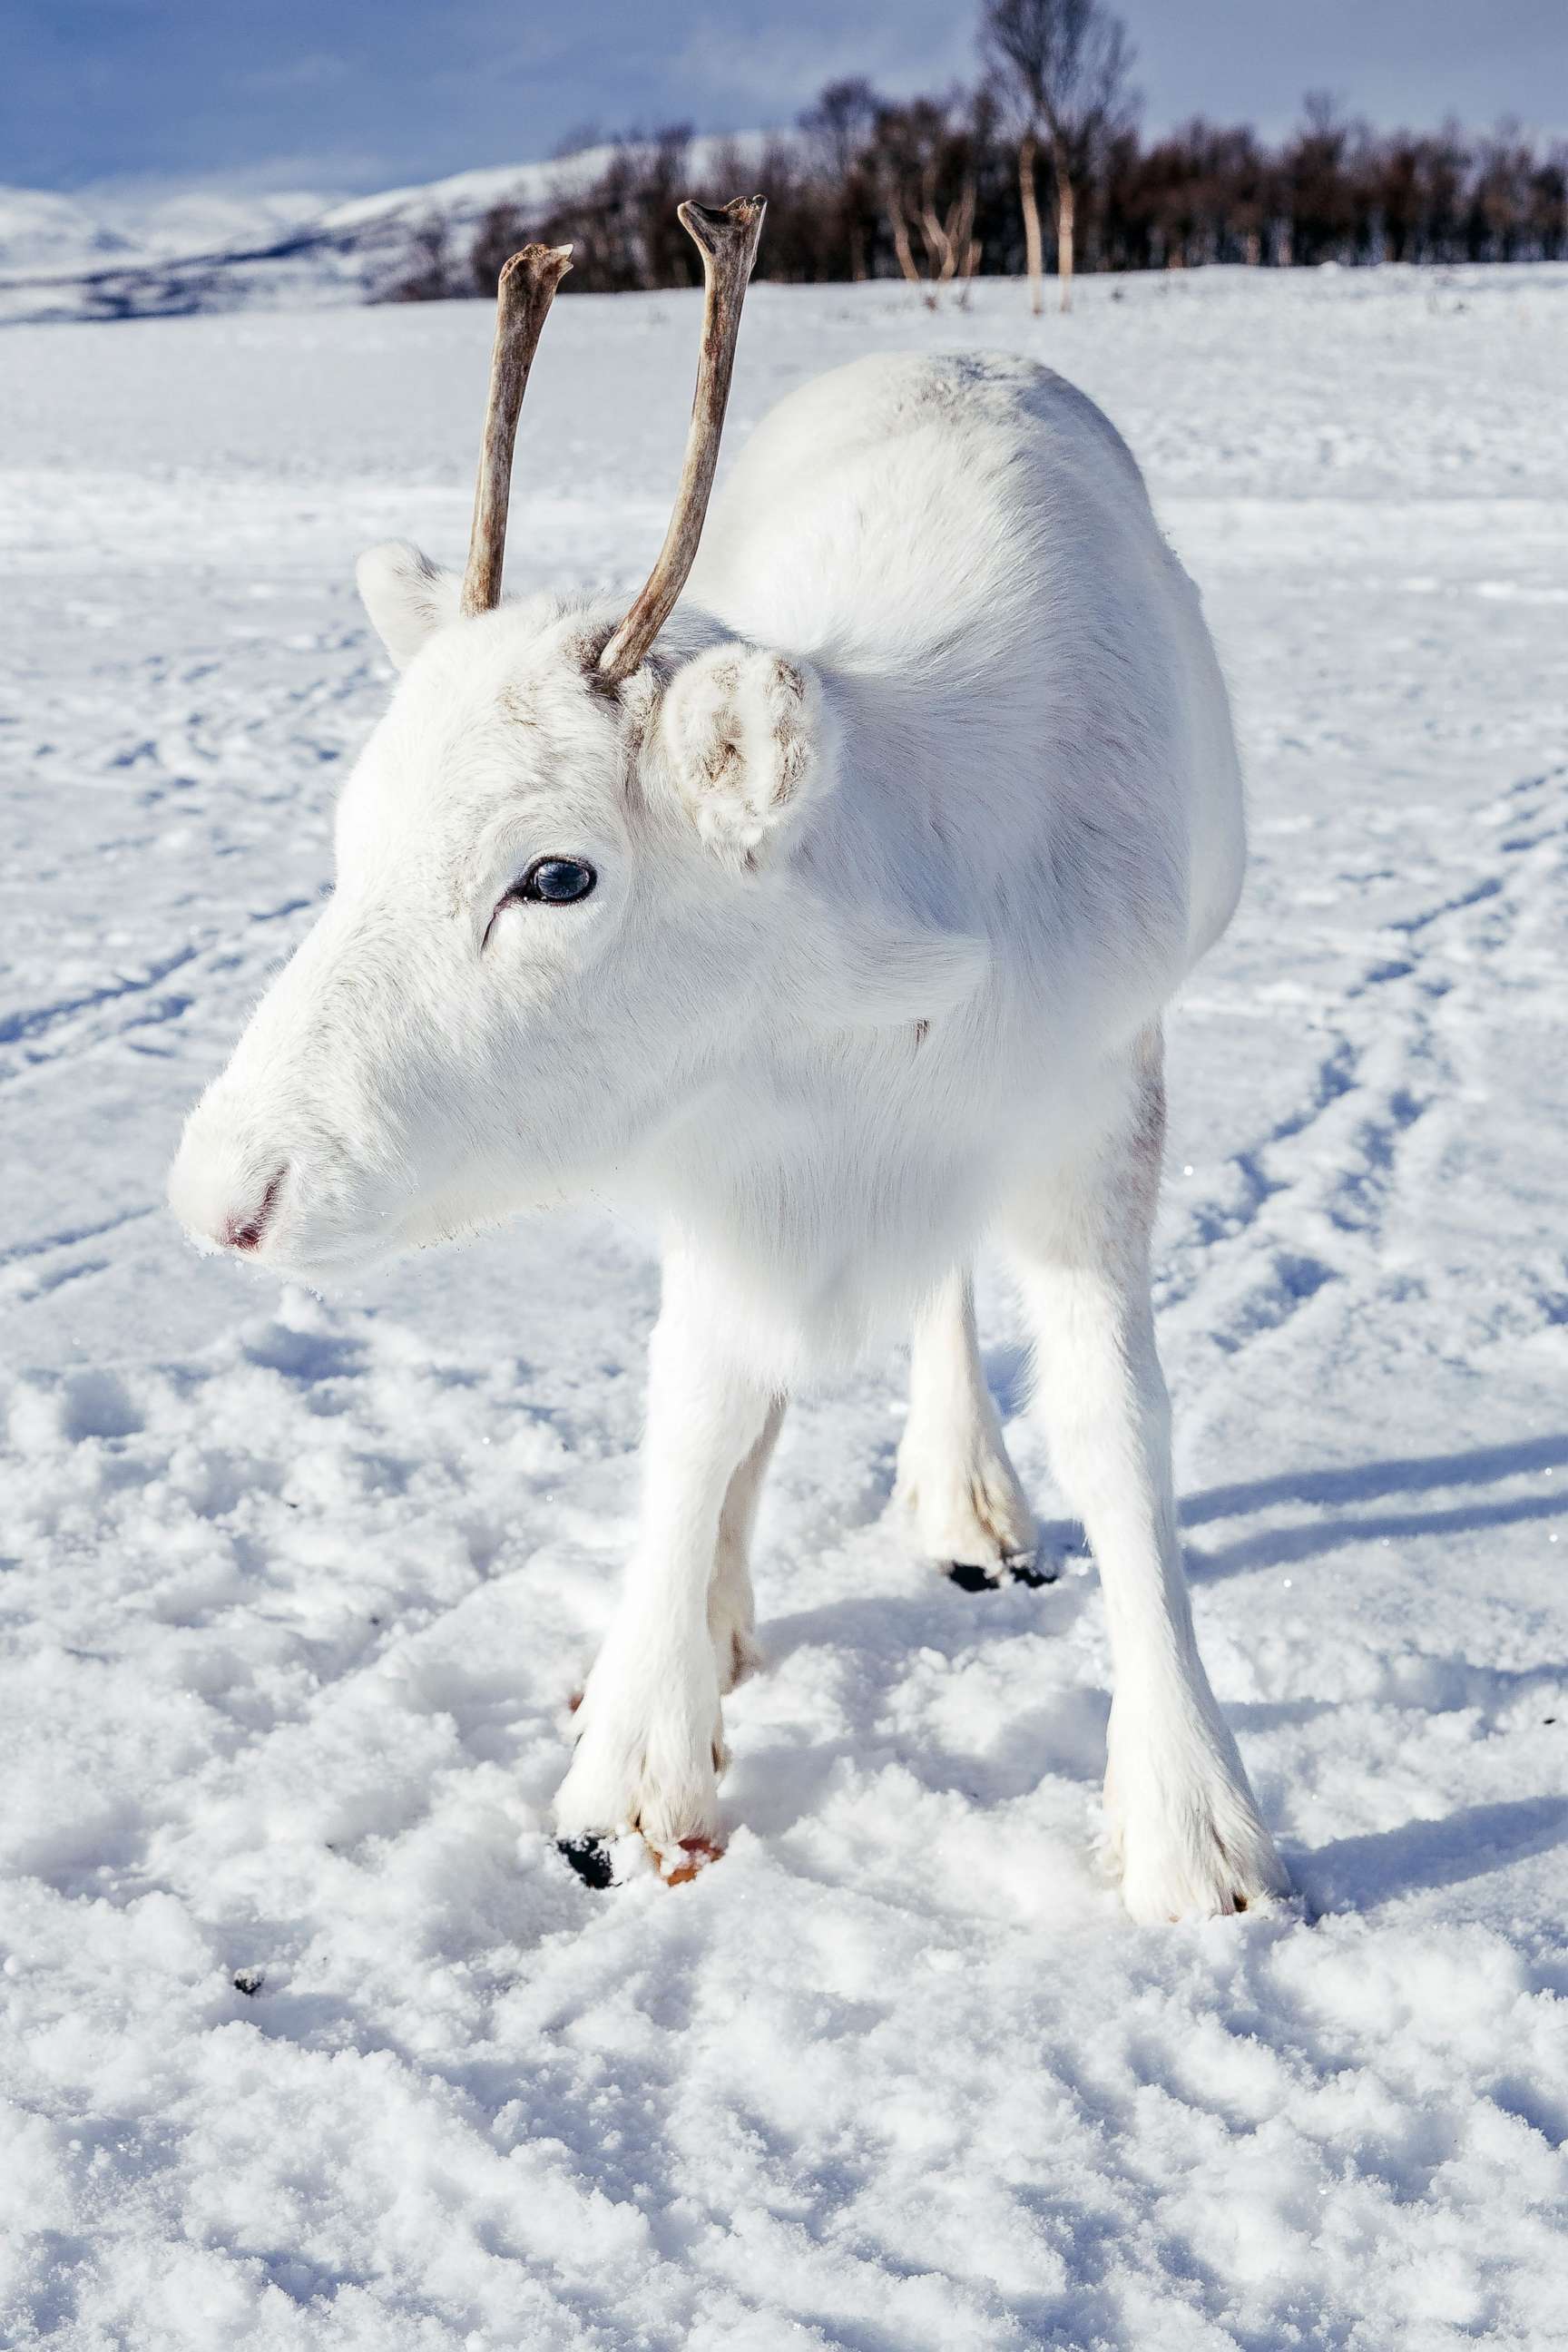 Snow deer! Stunning photographs capture rare white reindeer in